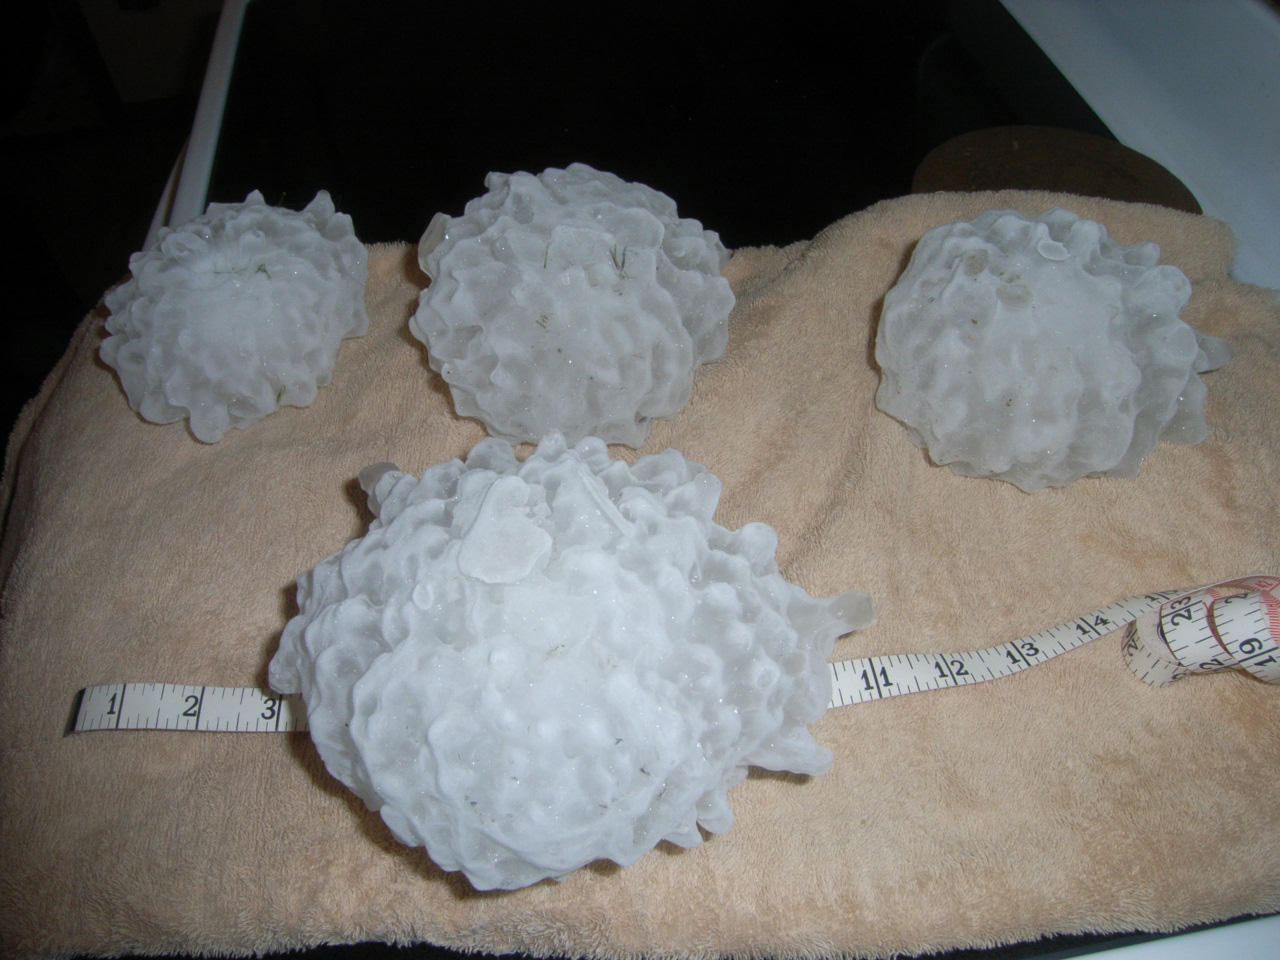 Volleyball size hailstones from Vivian, South Dakota on July 23, 2010